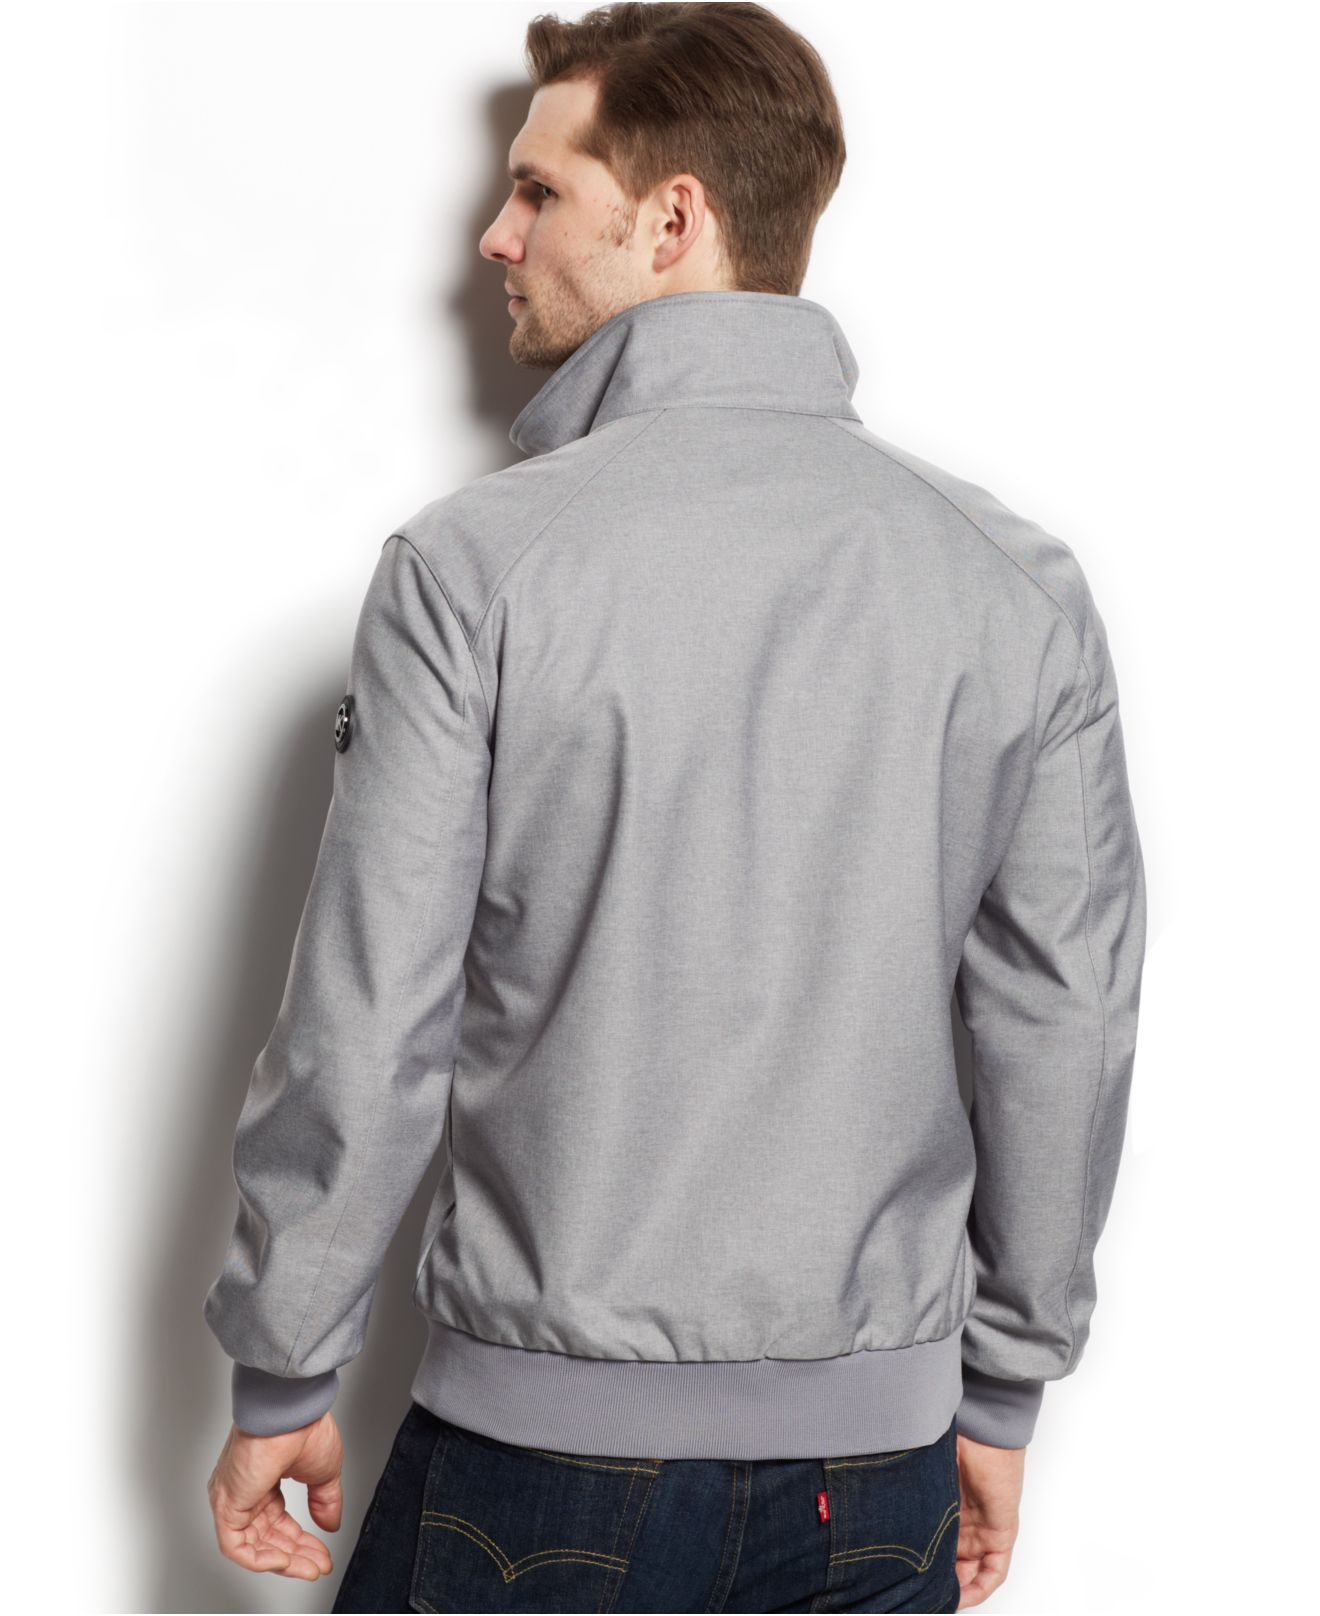 michael kors grey jacket mens